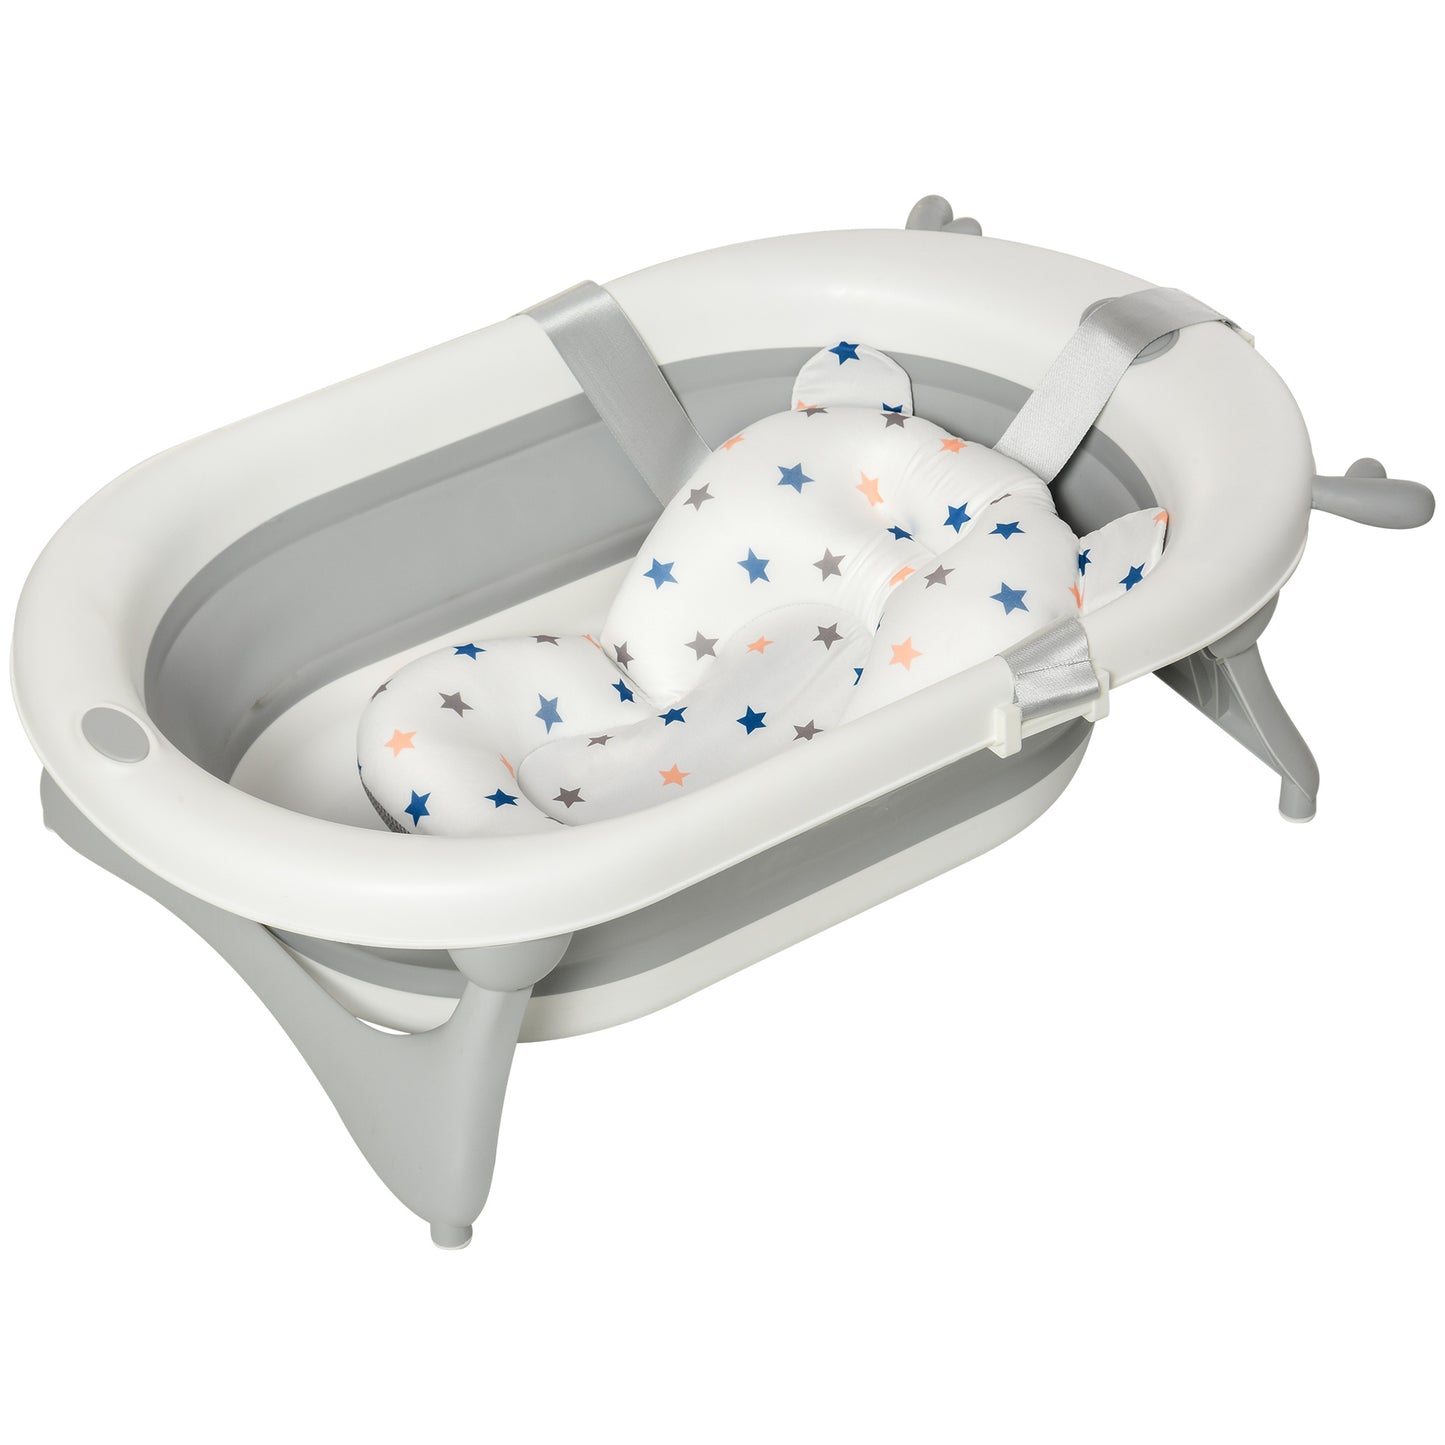 HOMCOM Foldable Portable Baby Bathtub w/ Baby Bath Temperature-Induced Water Plug for 0-3 years